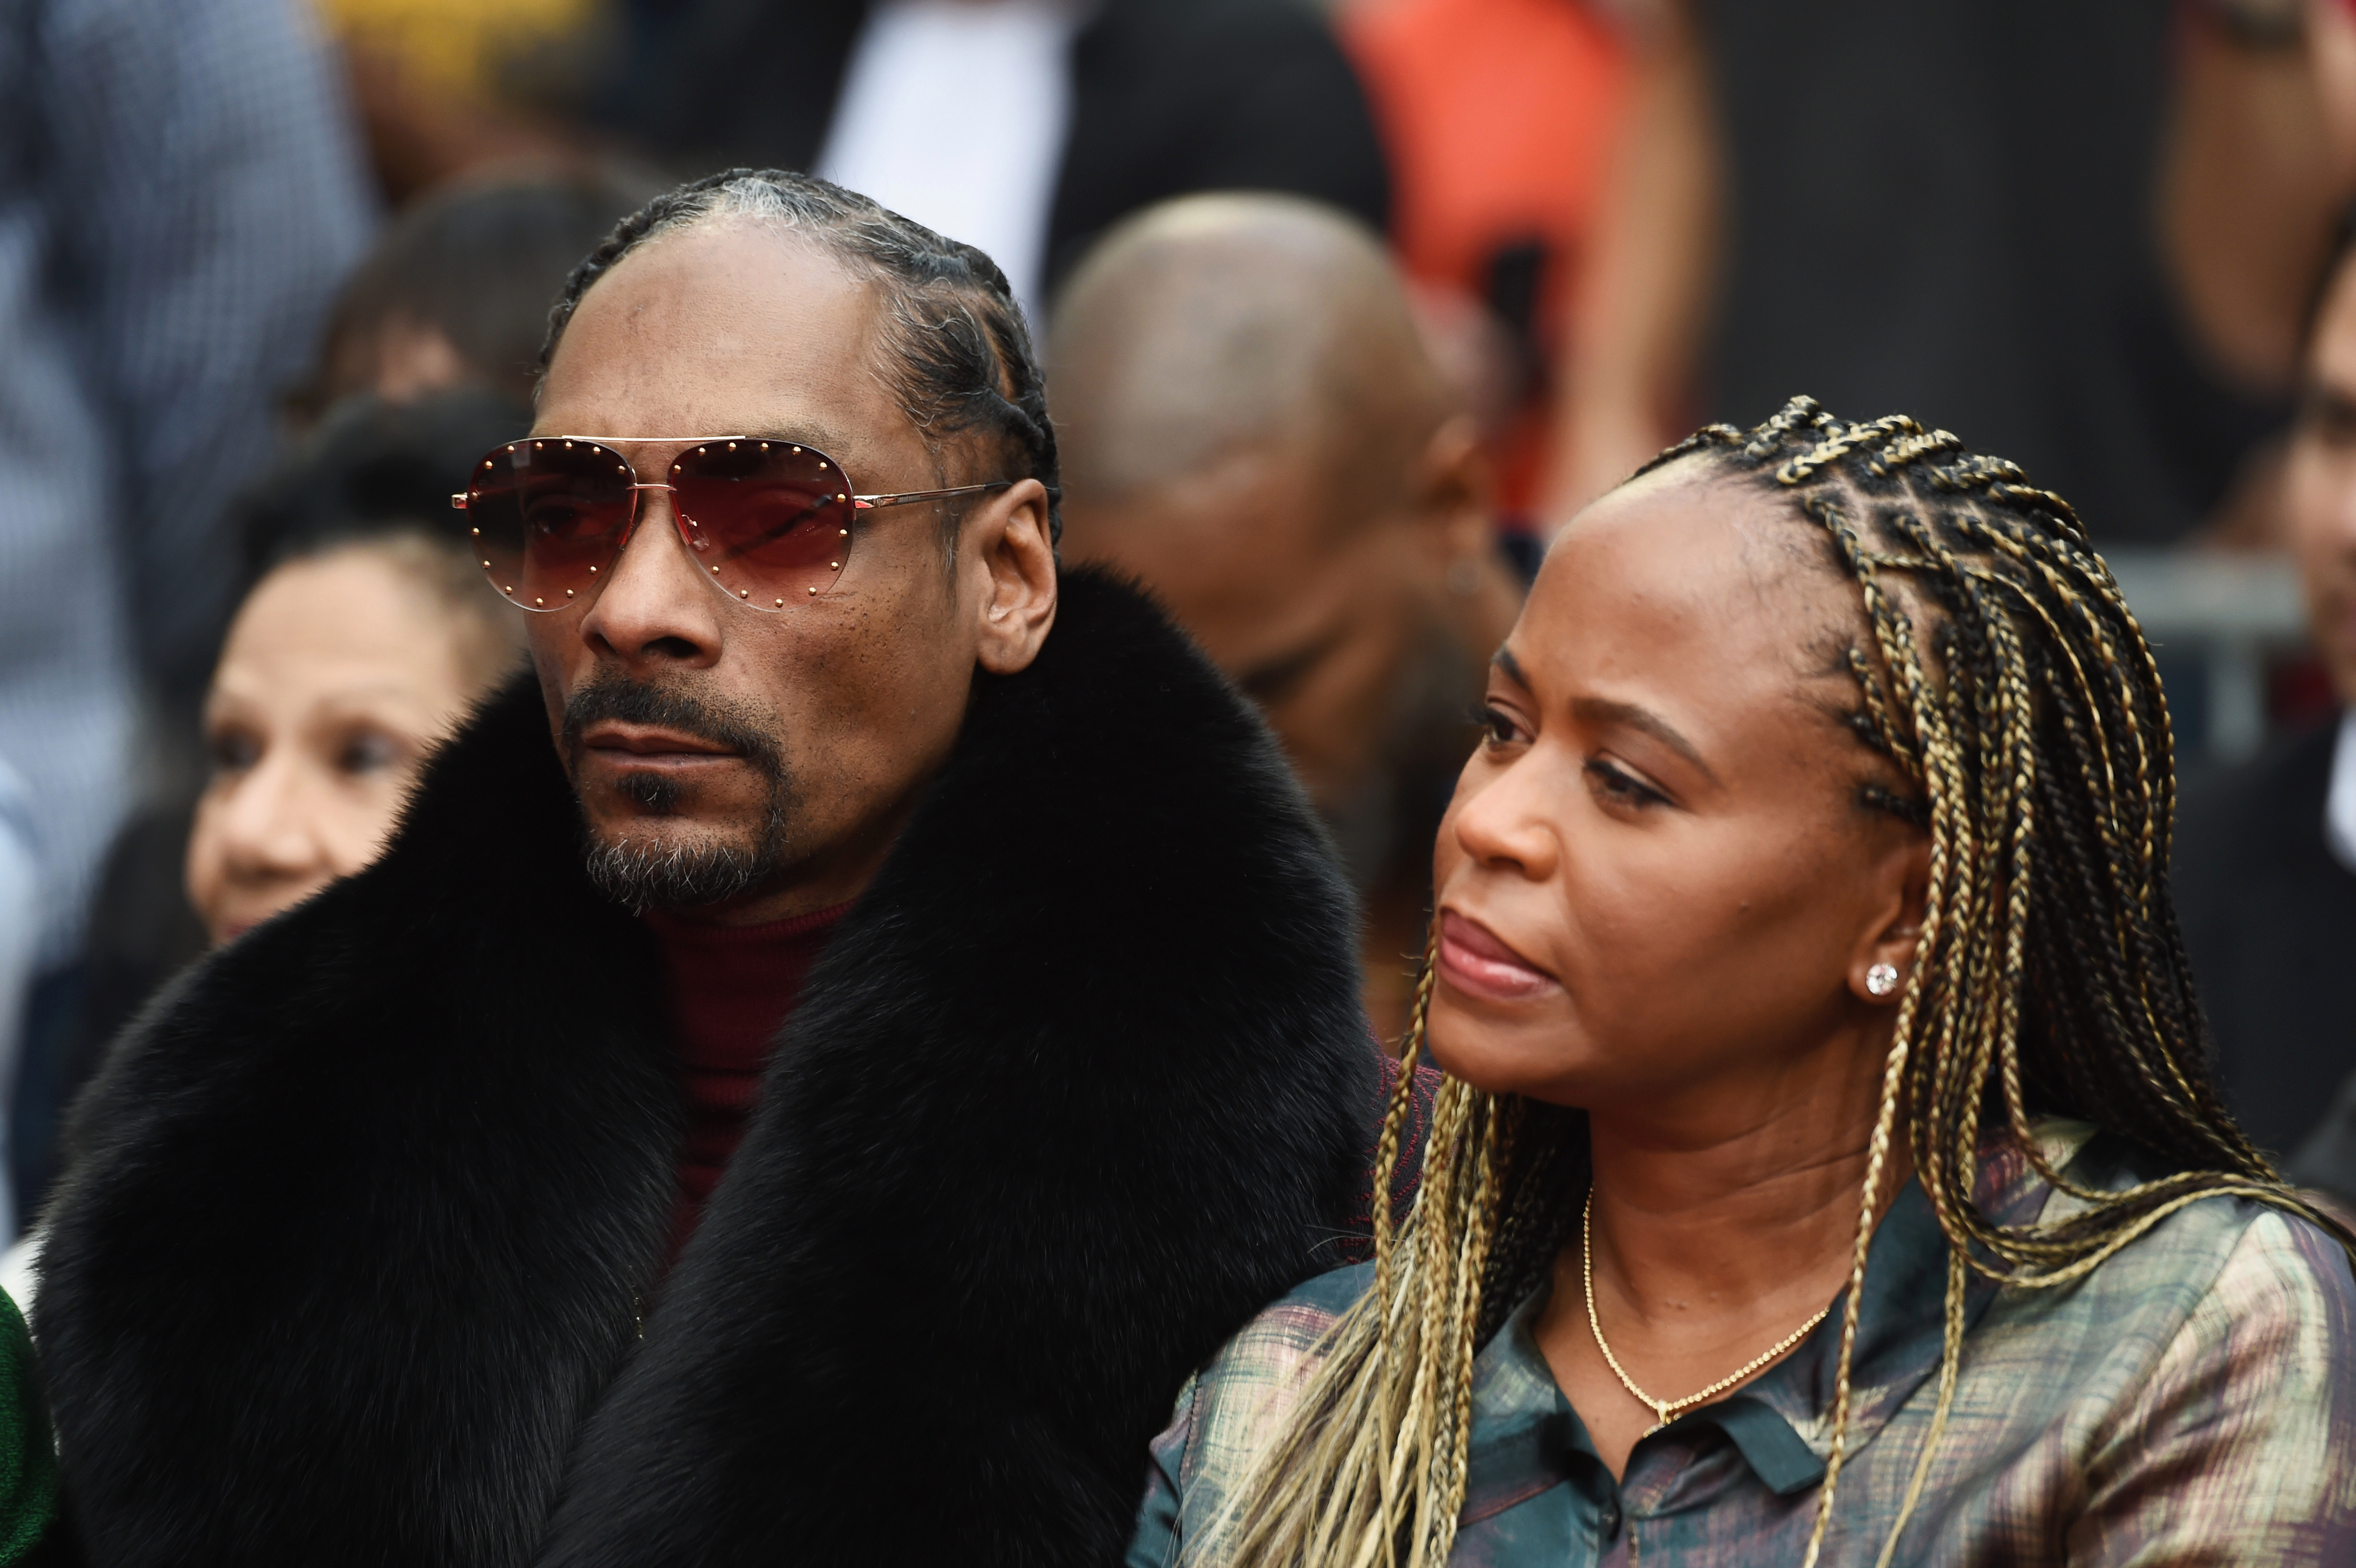 Who is Snoop Dogg's wife Shante Broadus? The US Sun